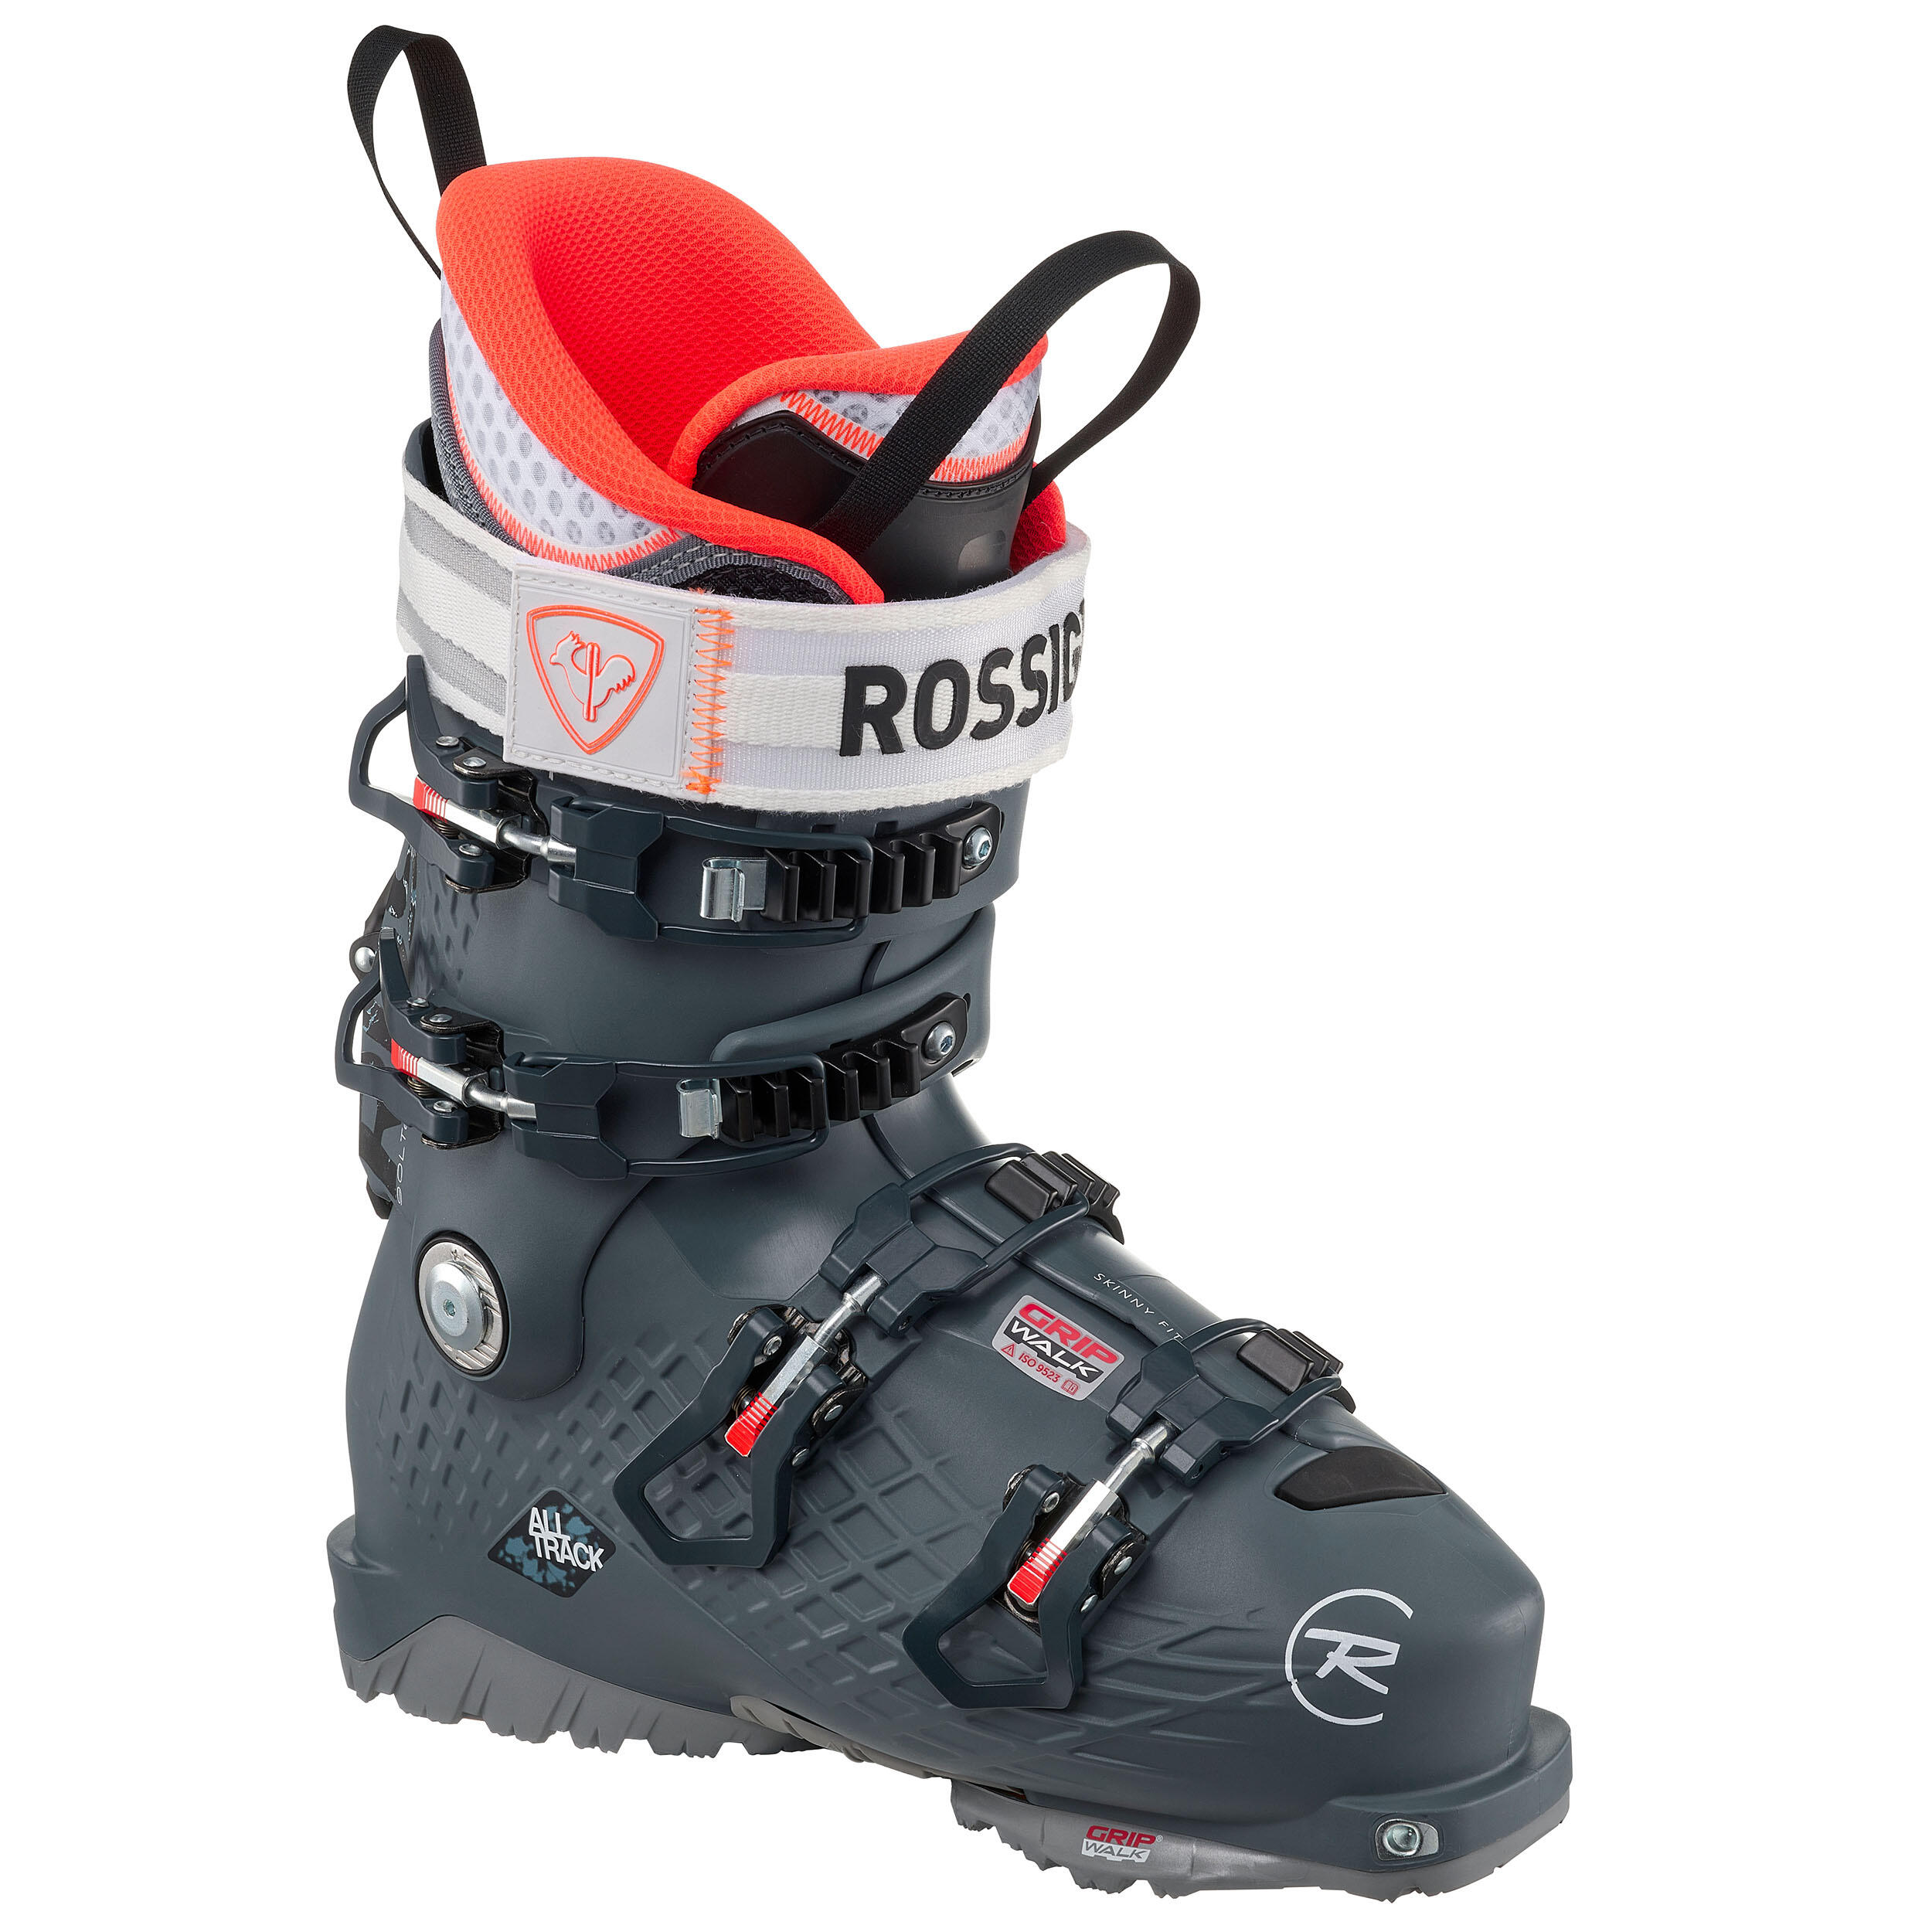 ROSSIGNOL Chaussure De Ski Femme - Alltrack Elite 90 Lt Gris Rose